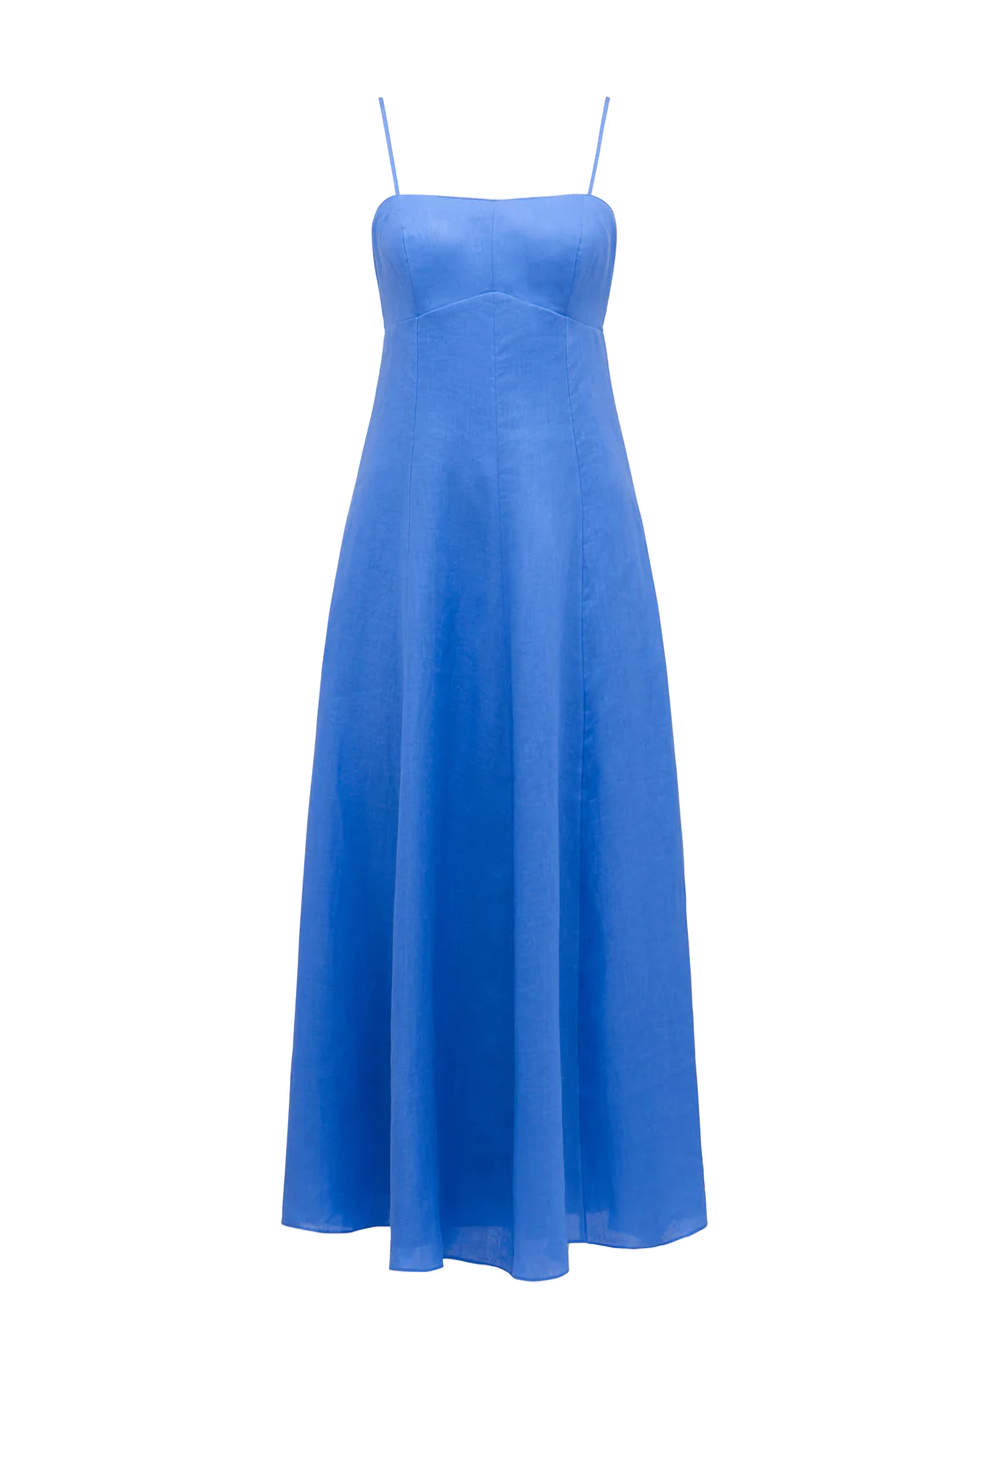 Forever New - Kimberly Strapless Midi Dress Blue